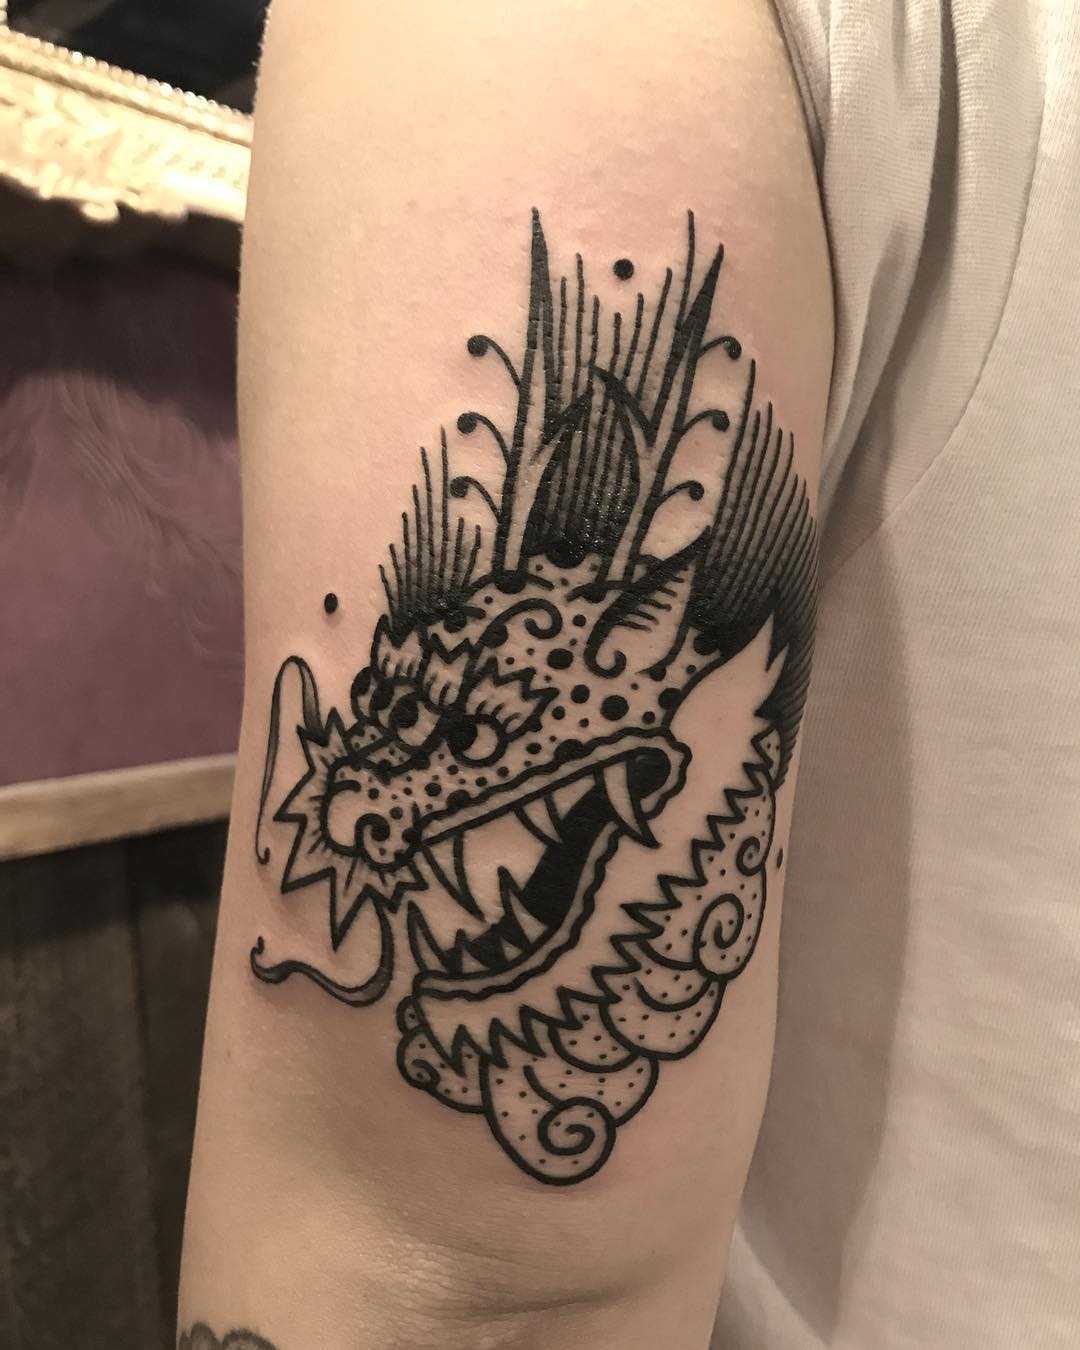 Cute dragon tattoo on the arm